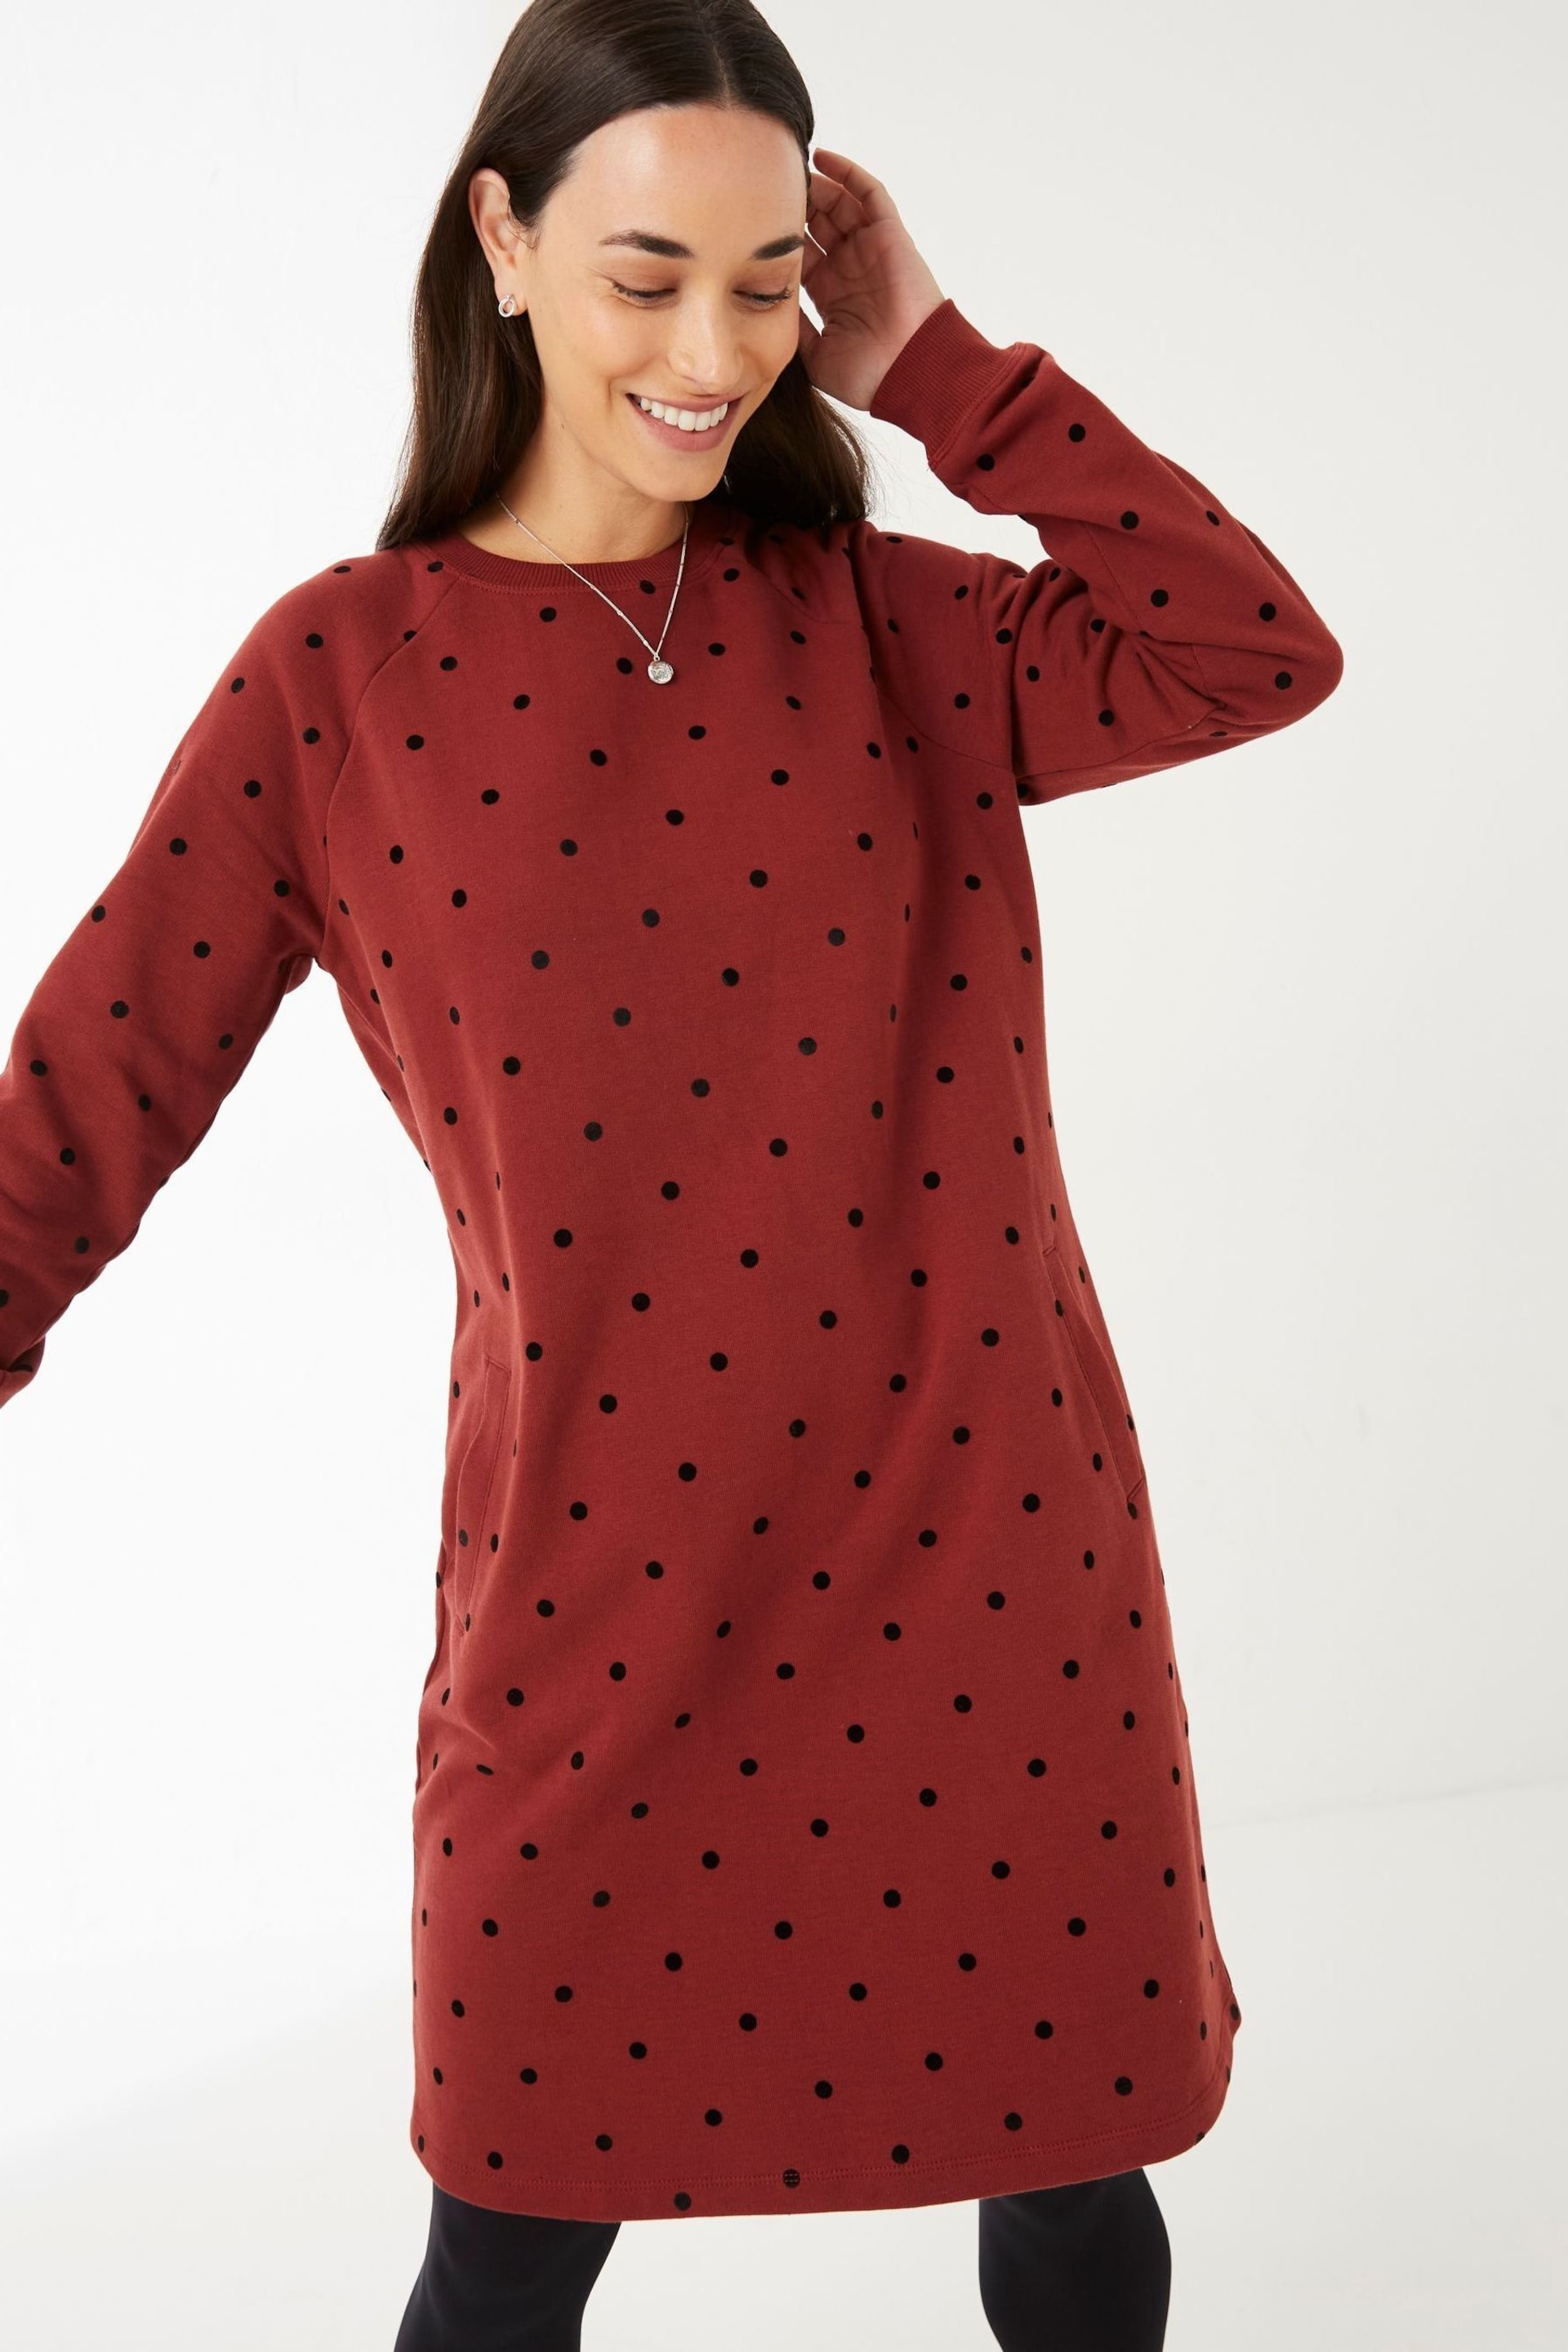 FatFace Red Spot Sweat Dress - Image 1 of 4